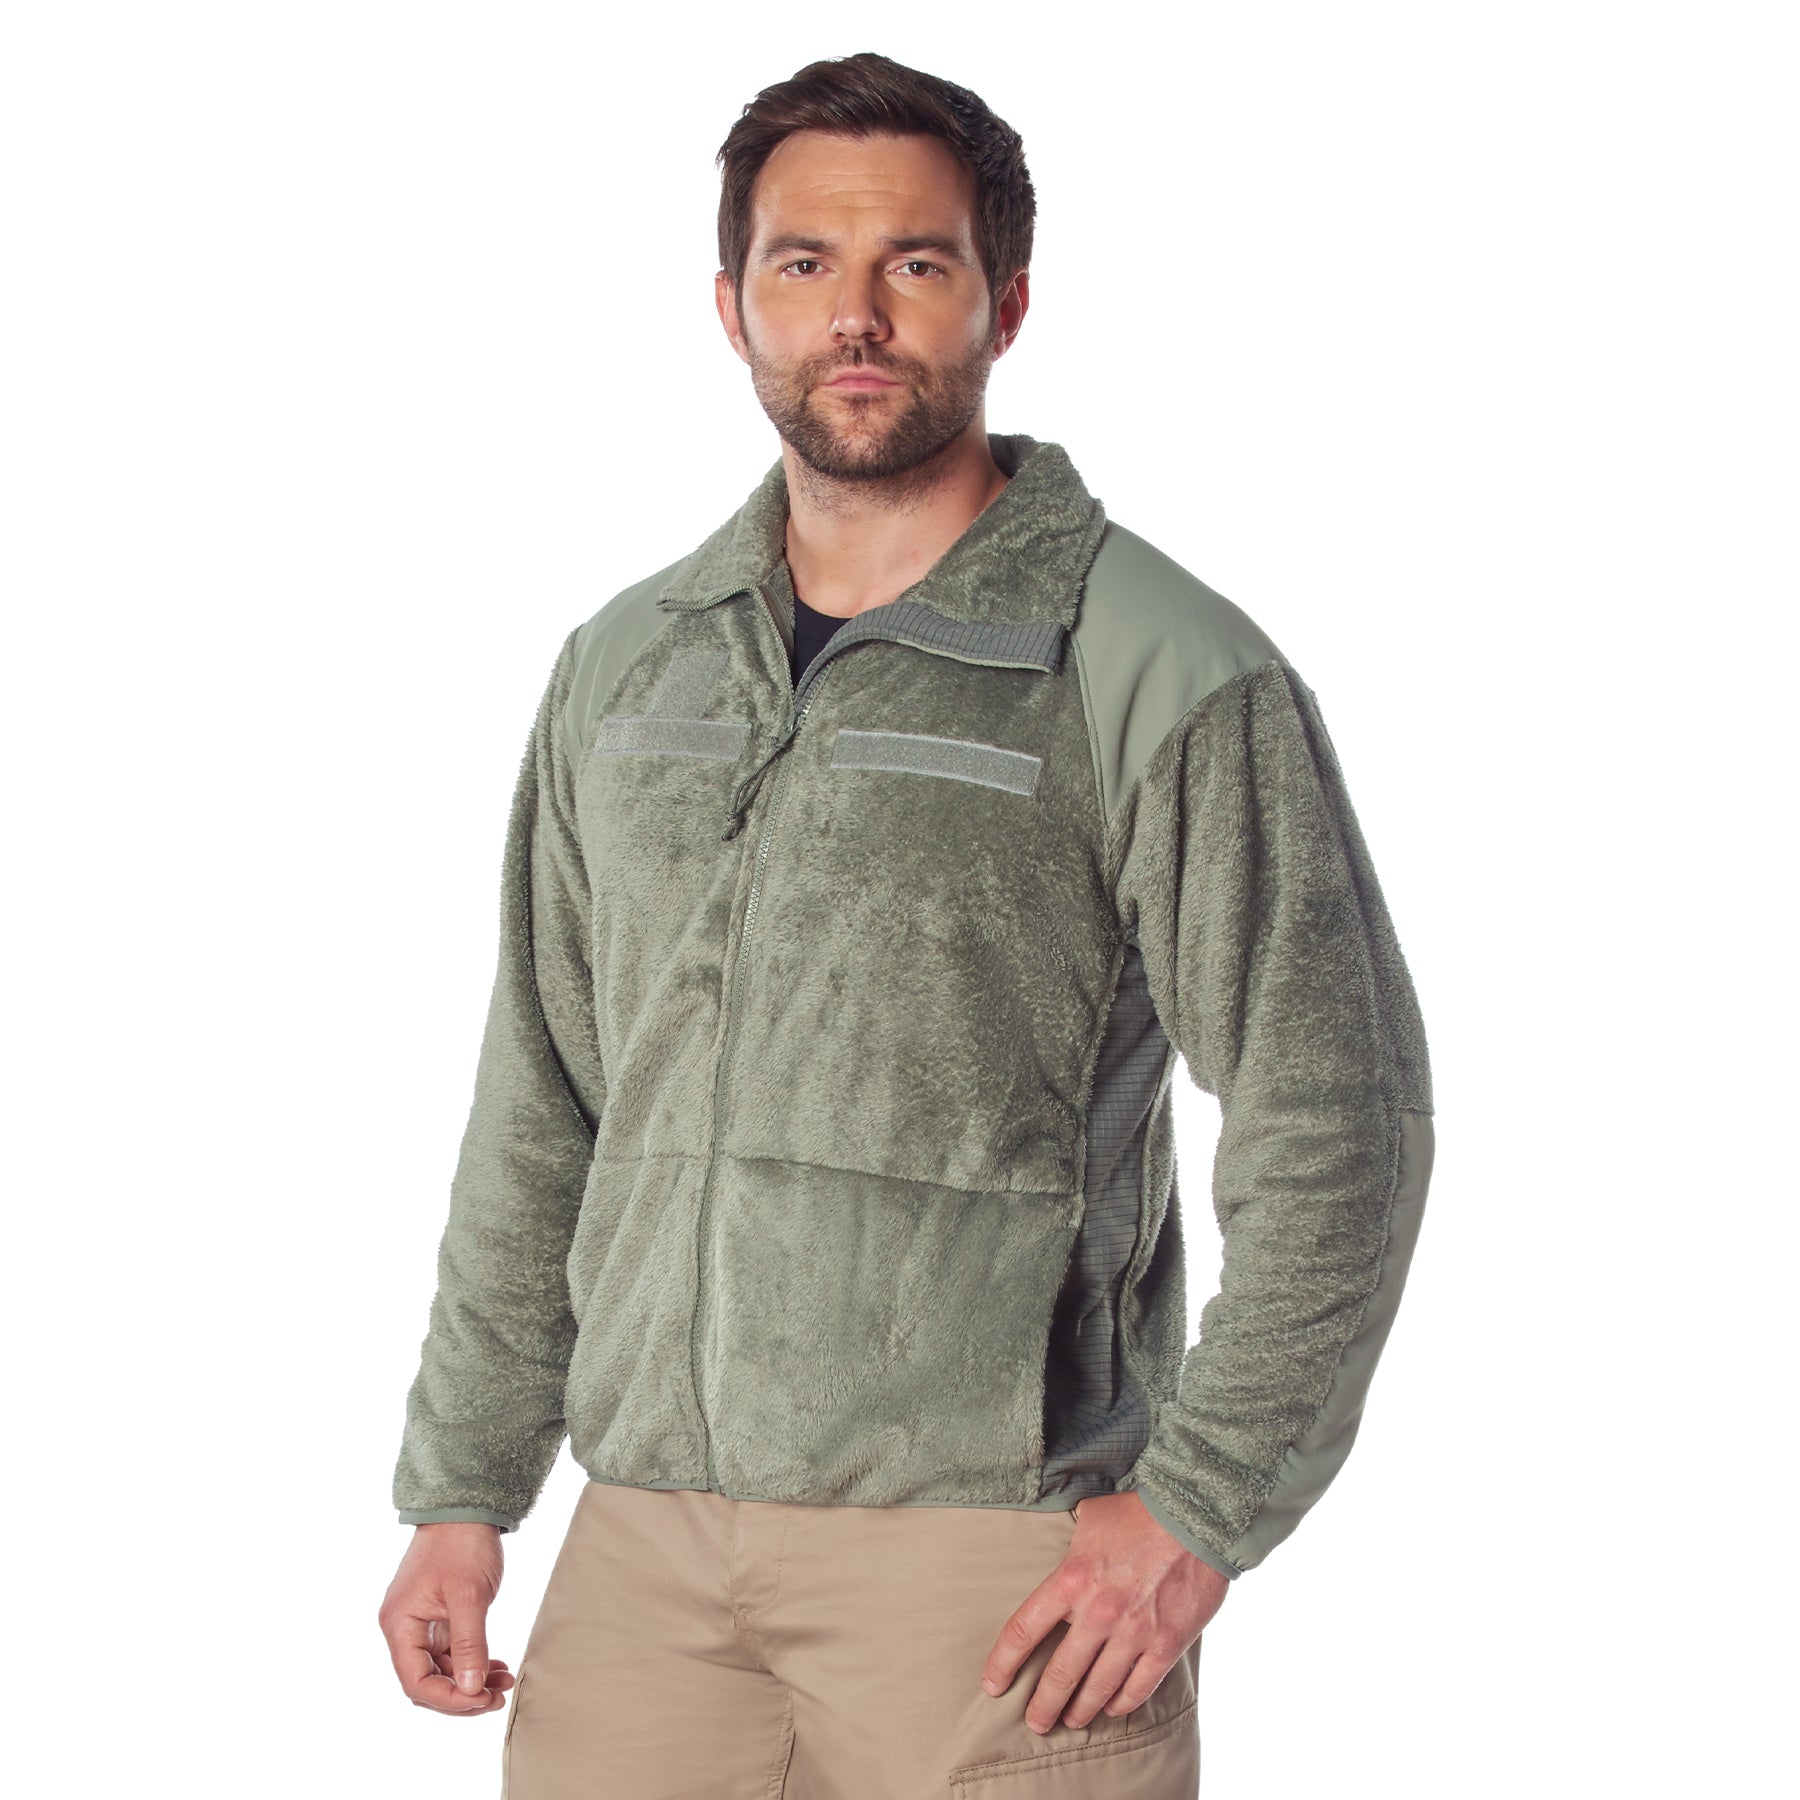 [AR 670-1][Military] Poly Gen 3 ECWCS Fleece Liner Jackets Foliage Green